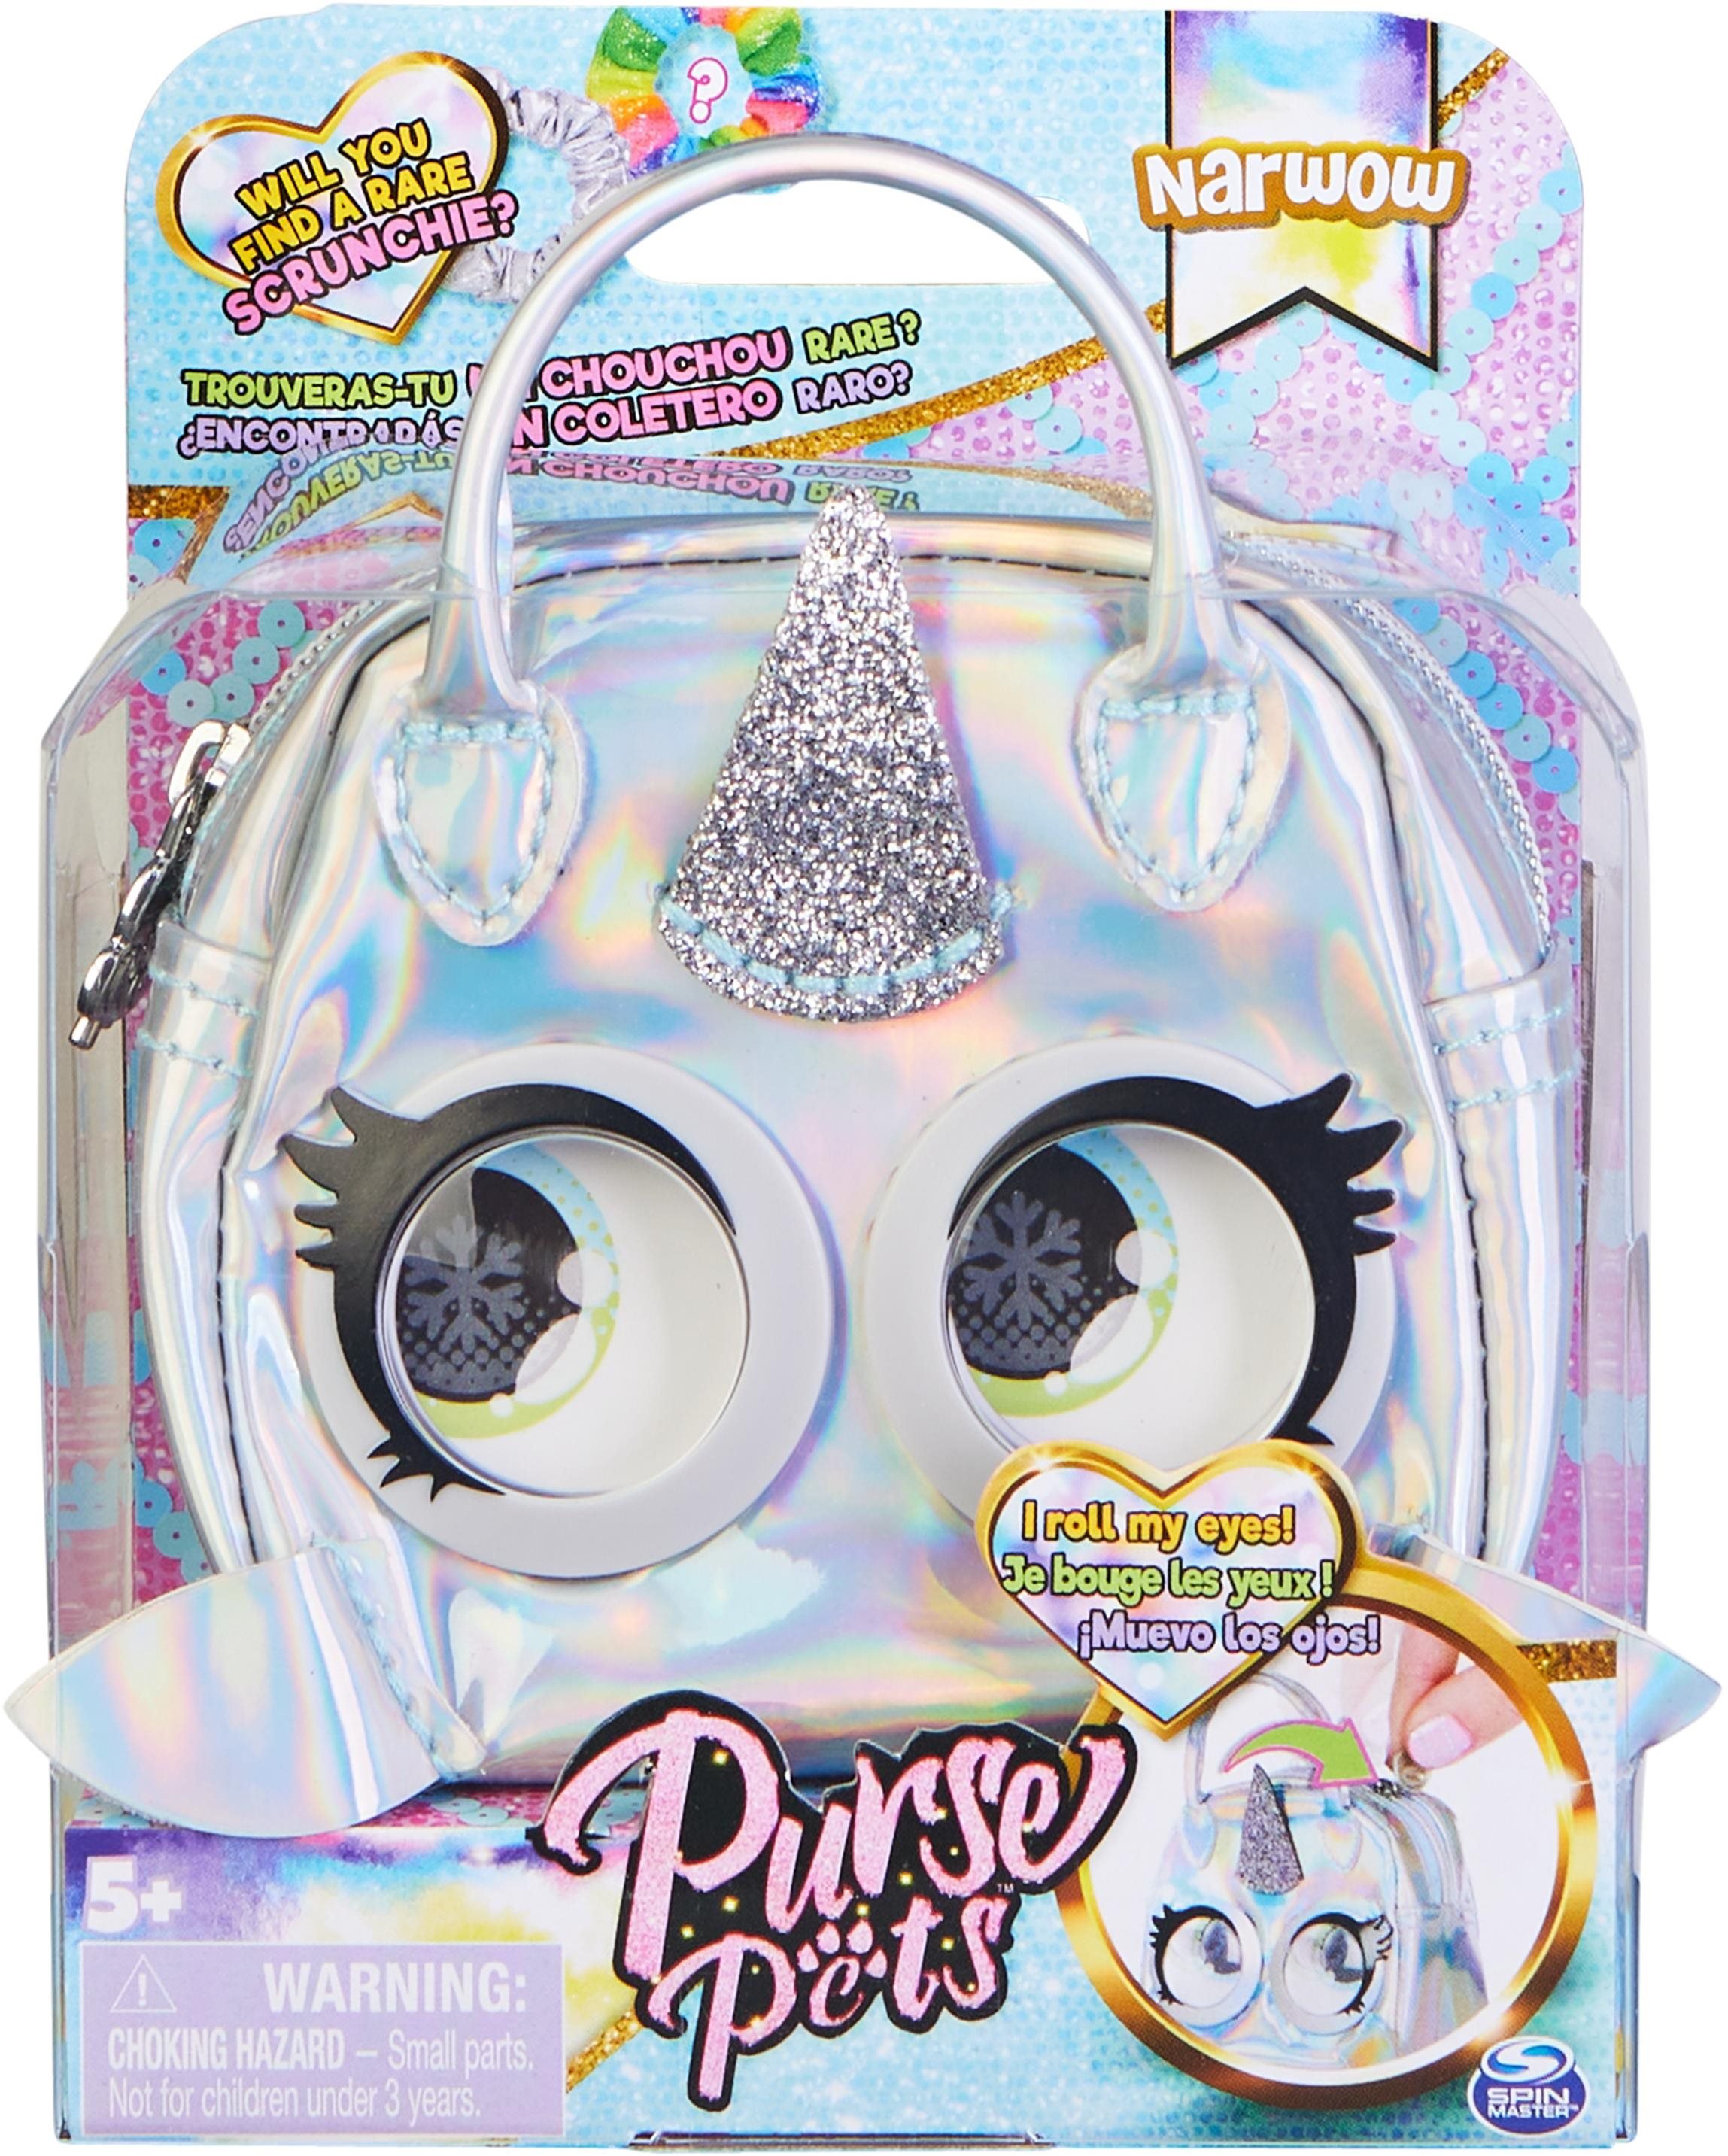 Poopsie Pooey Puitton Surprise Slime Kit for sale online | eBay